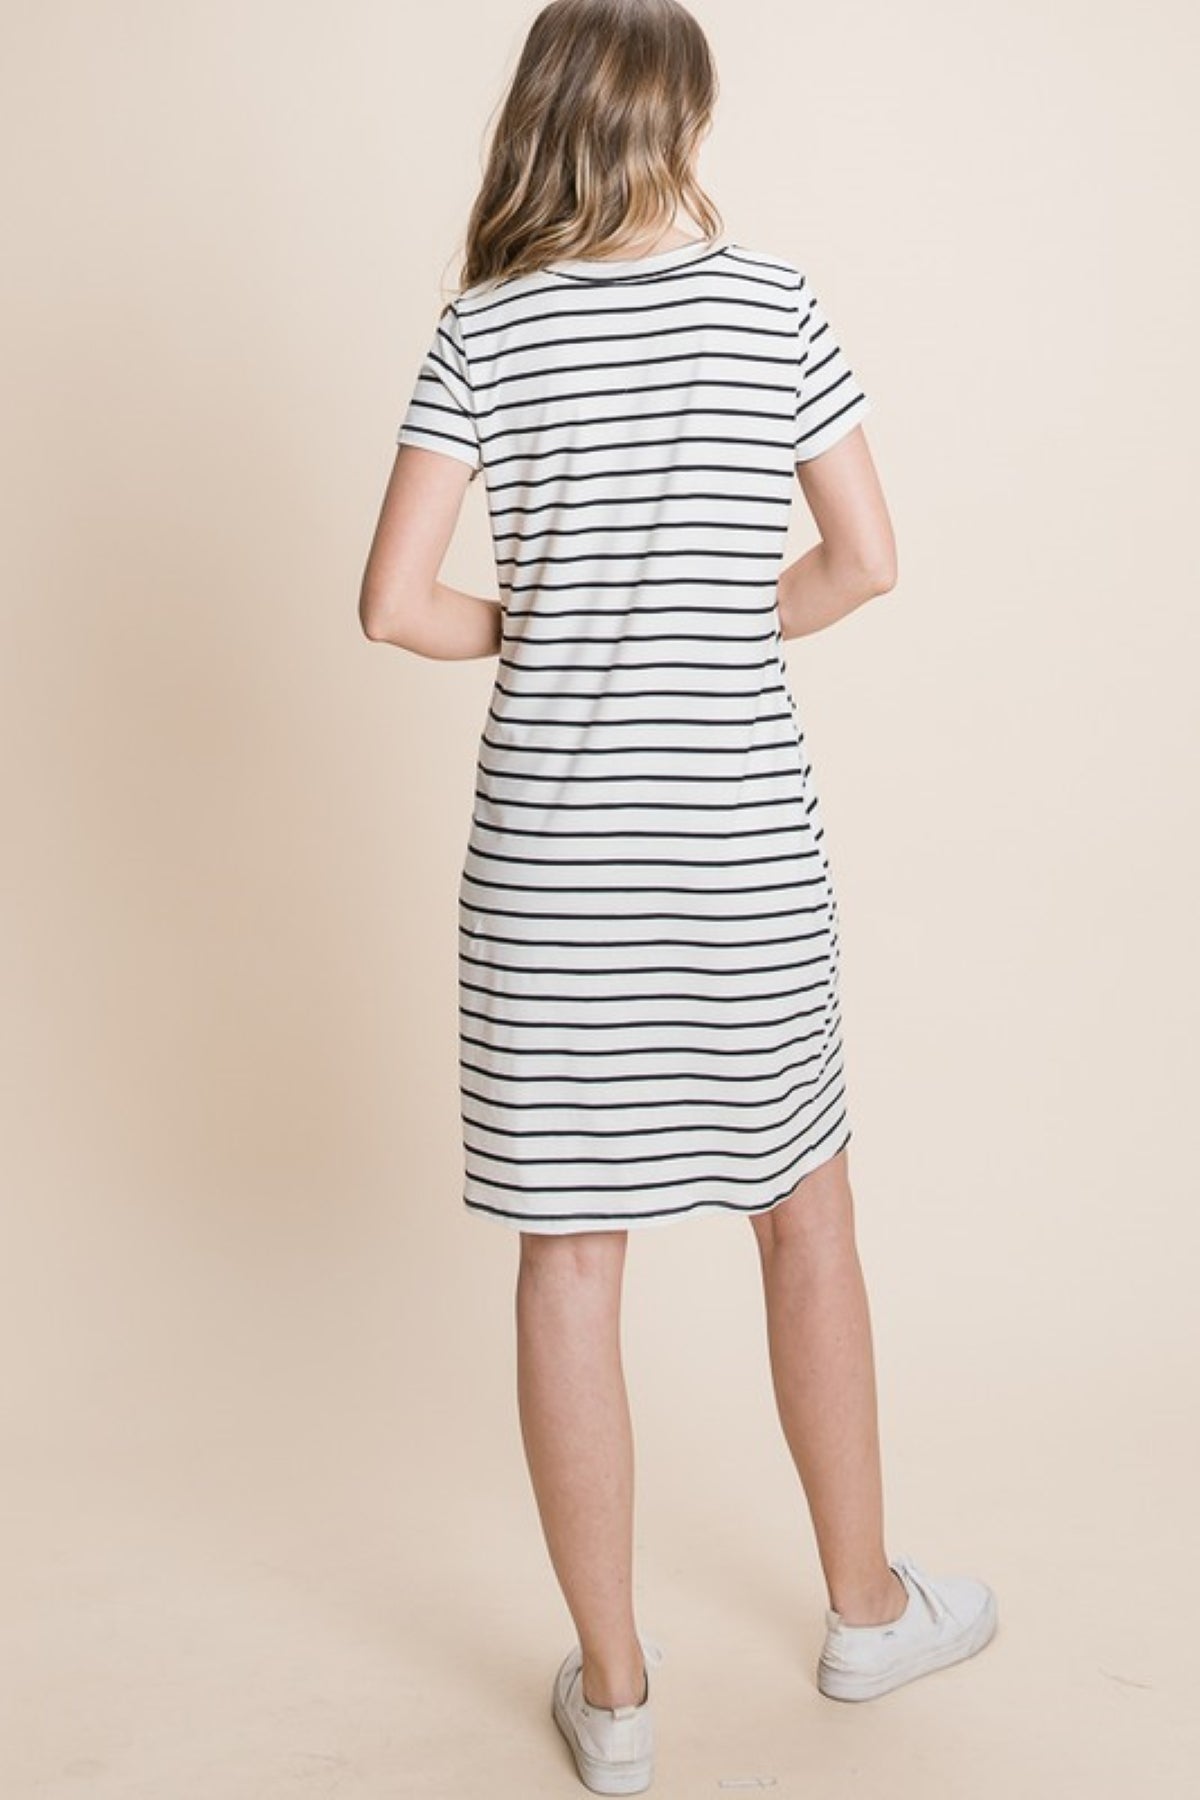 Grayson Casual Striped Dress